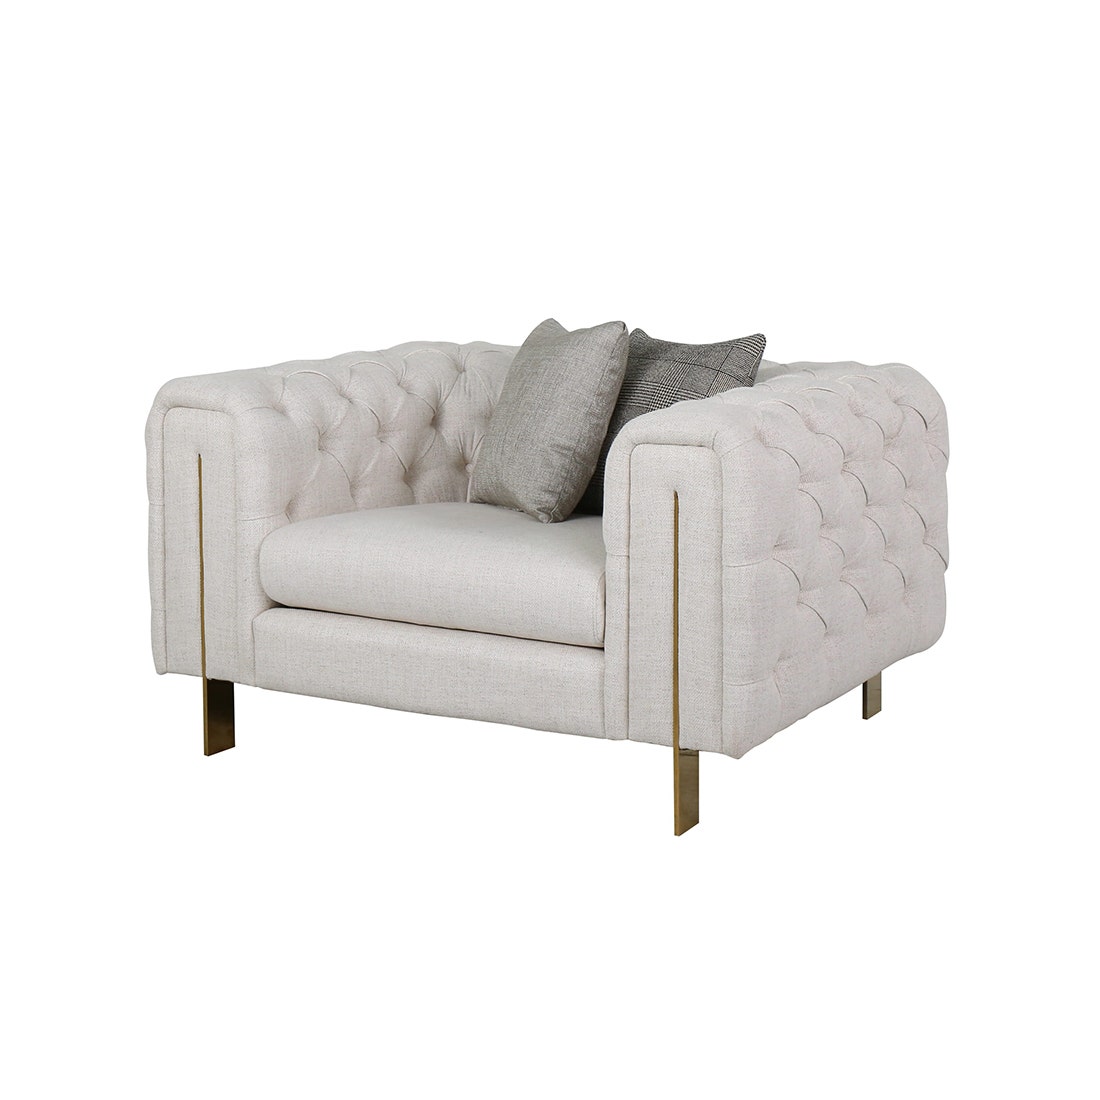 19146380-fuyuki-furniture-sofa-recliner-sofa-45